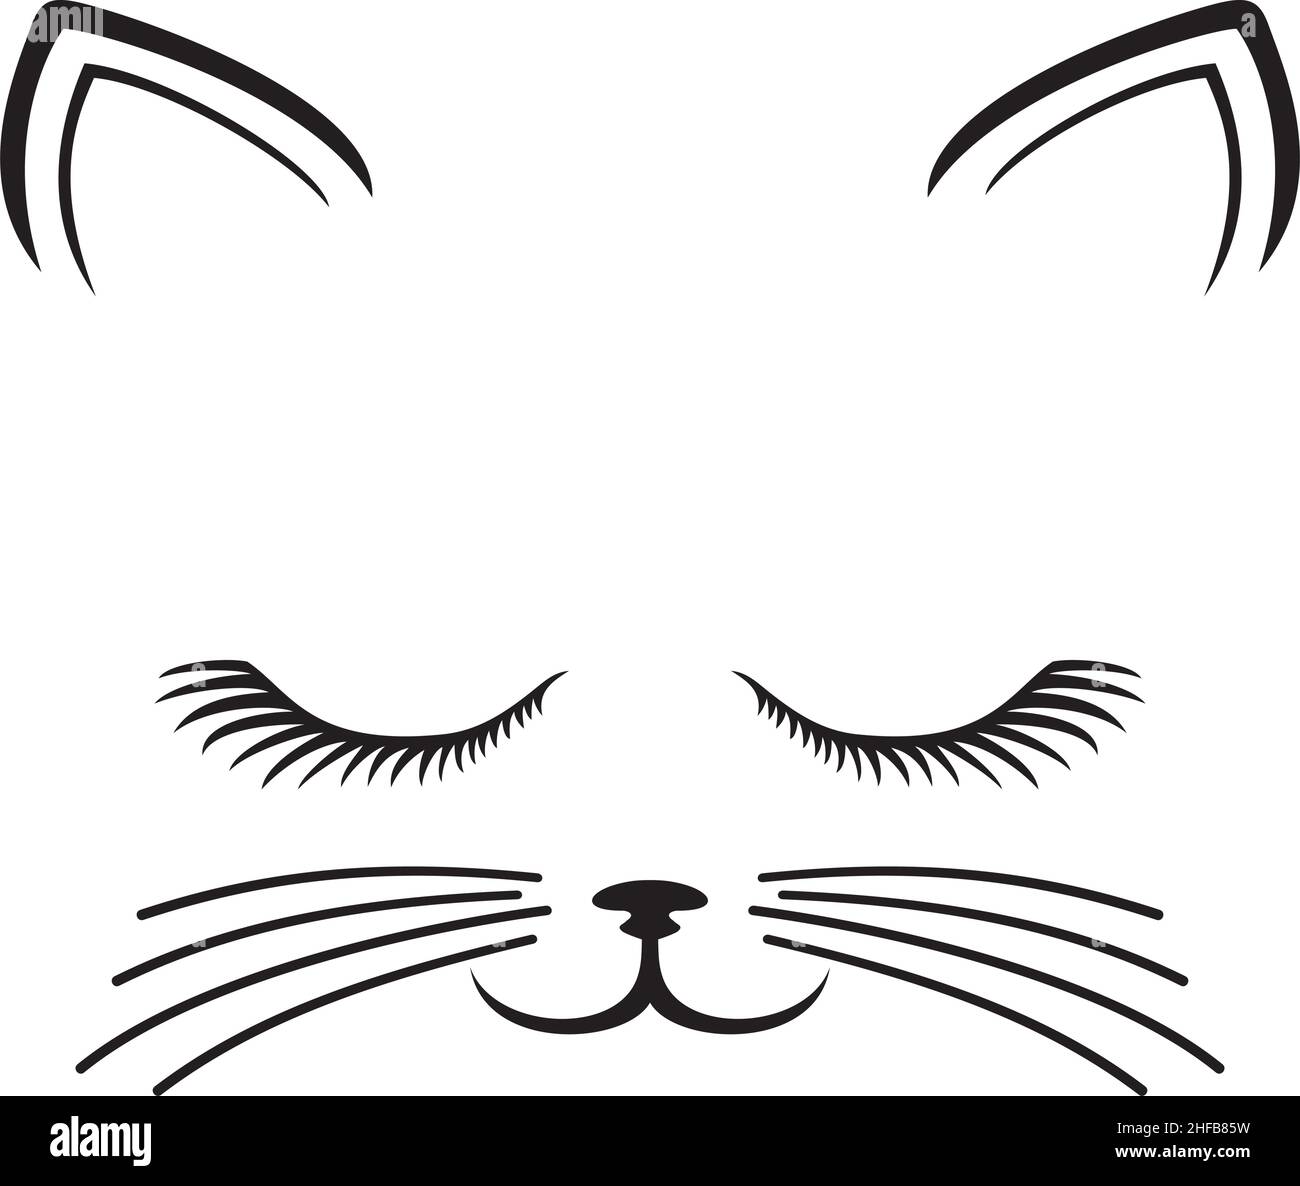 Niedliche Katze Kopf Vektor-Illustration Stock-Vektorgrafik - Alamy